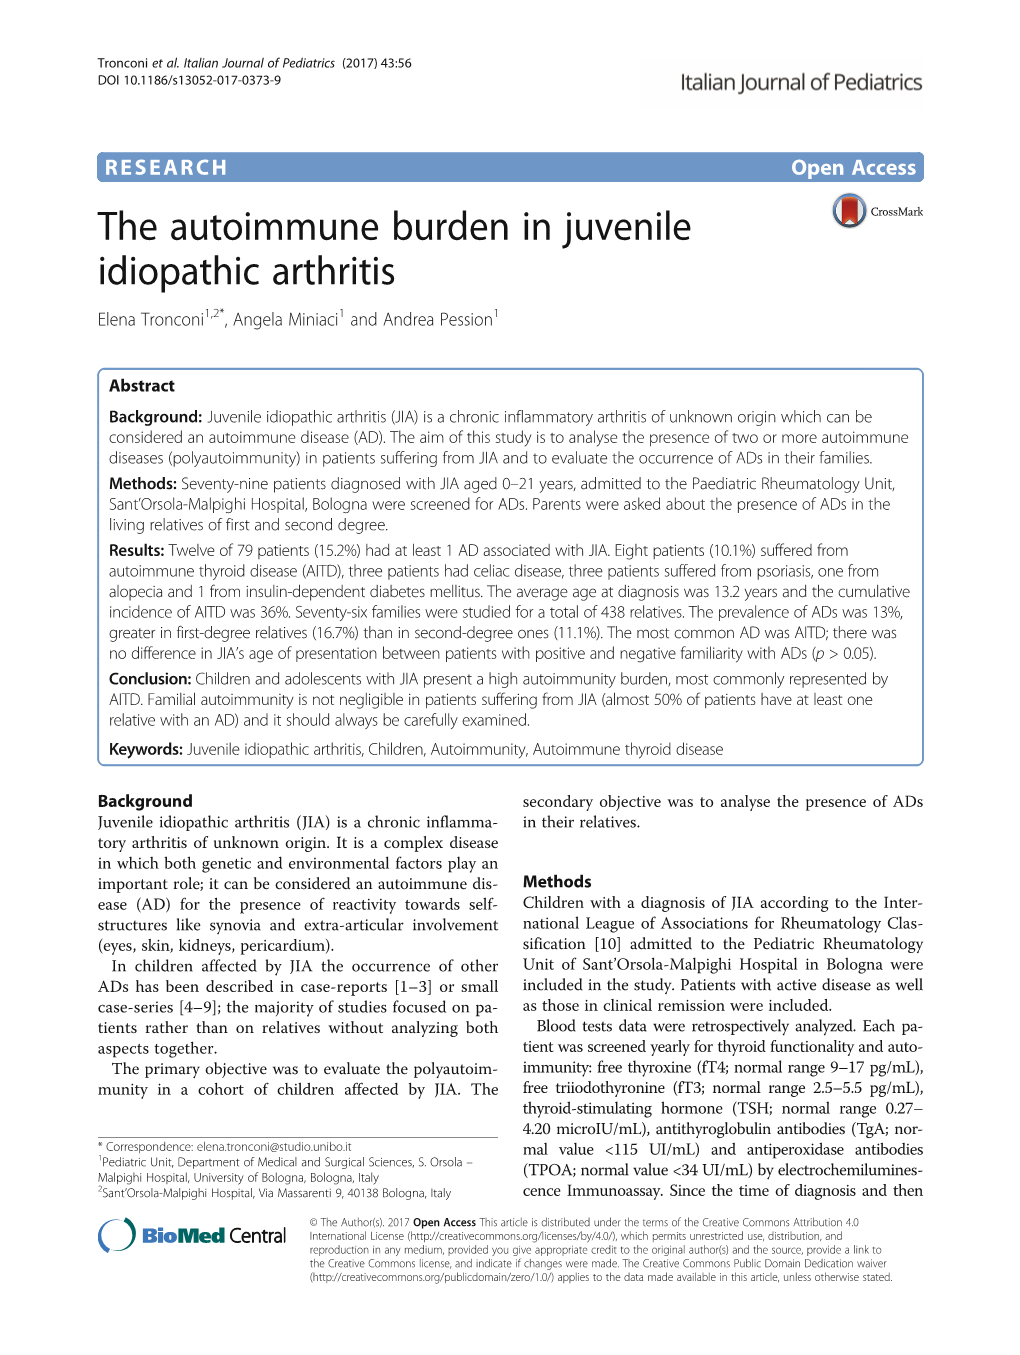 The Autoimmune Burden in Juvenile Idiopathic Arthritis Elena Tronconi1,2*, Angela Miniaci1 and Andrea Pession1